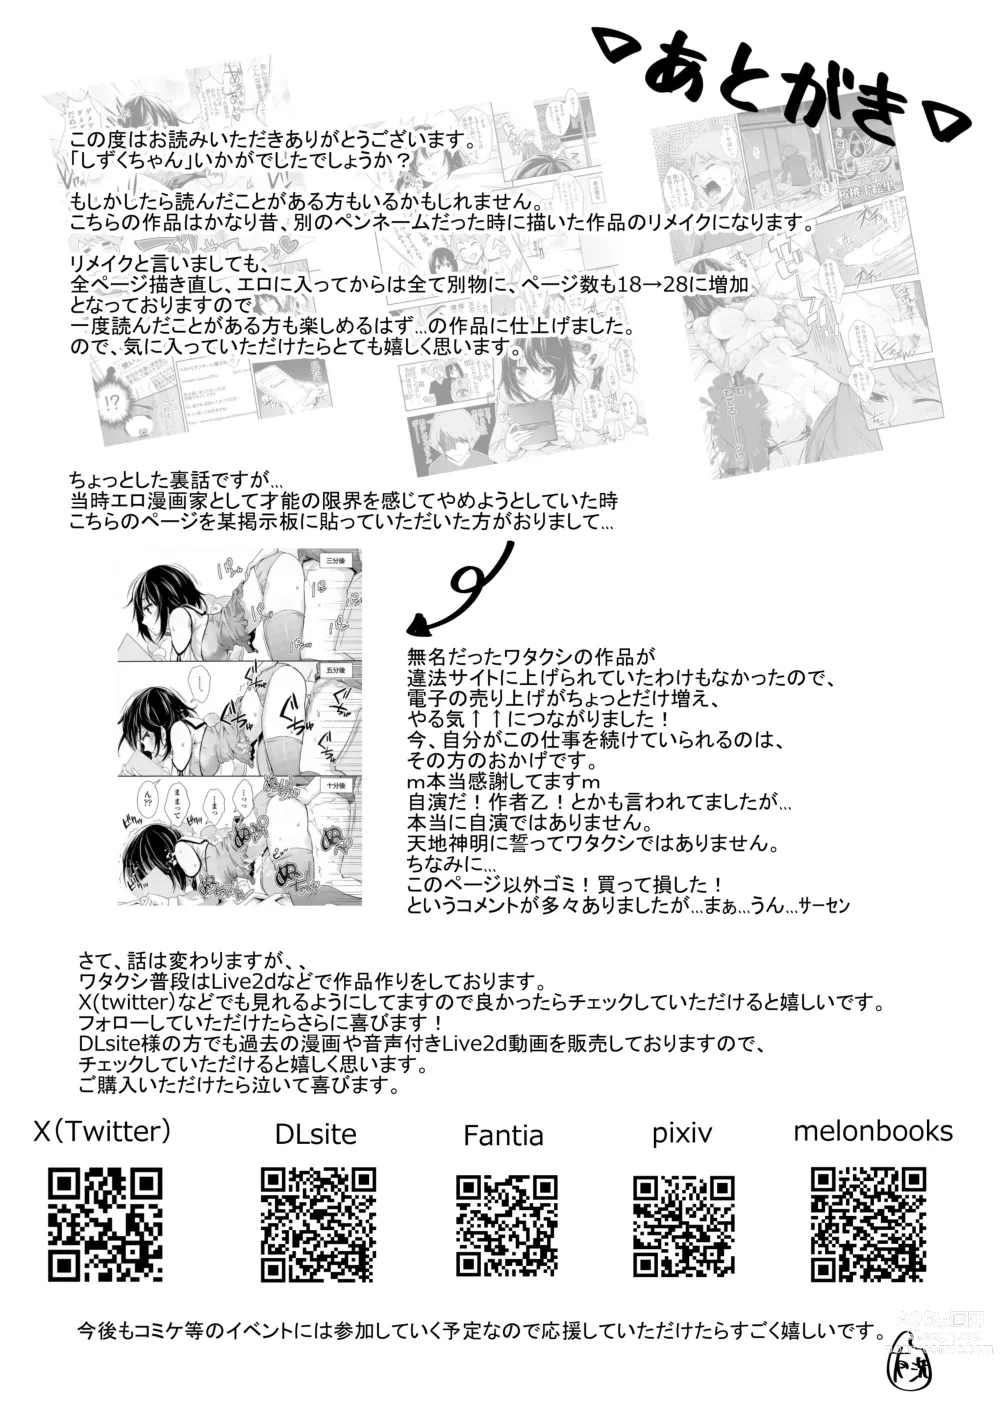 Page 33 of doujinshi Shizuku-chan